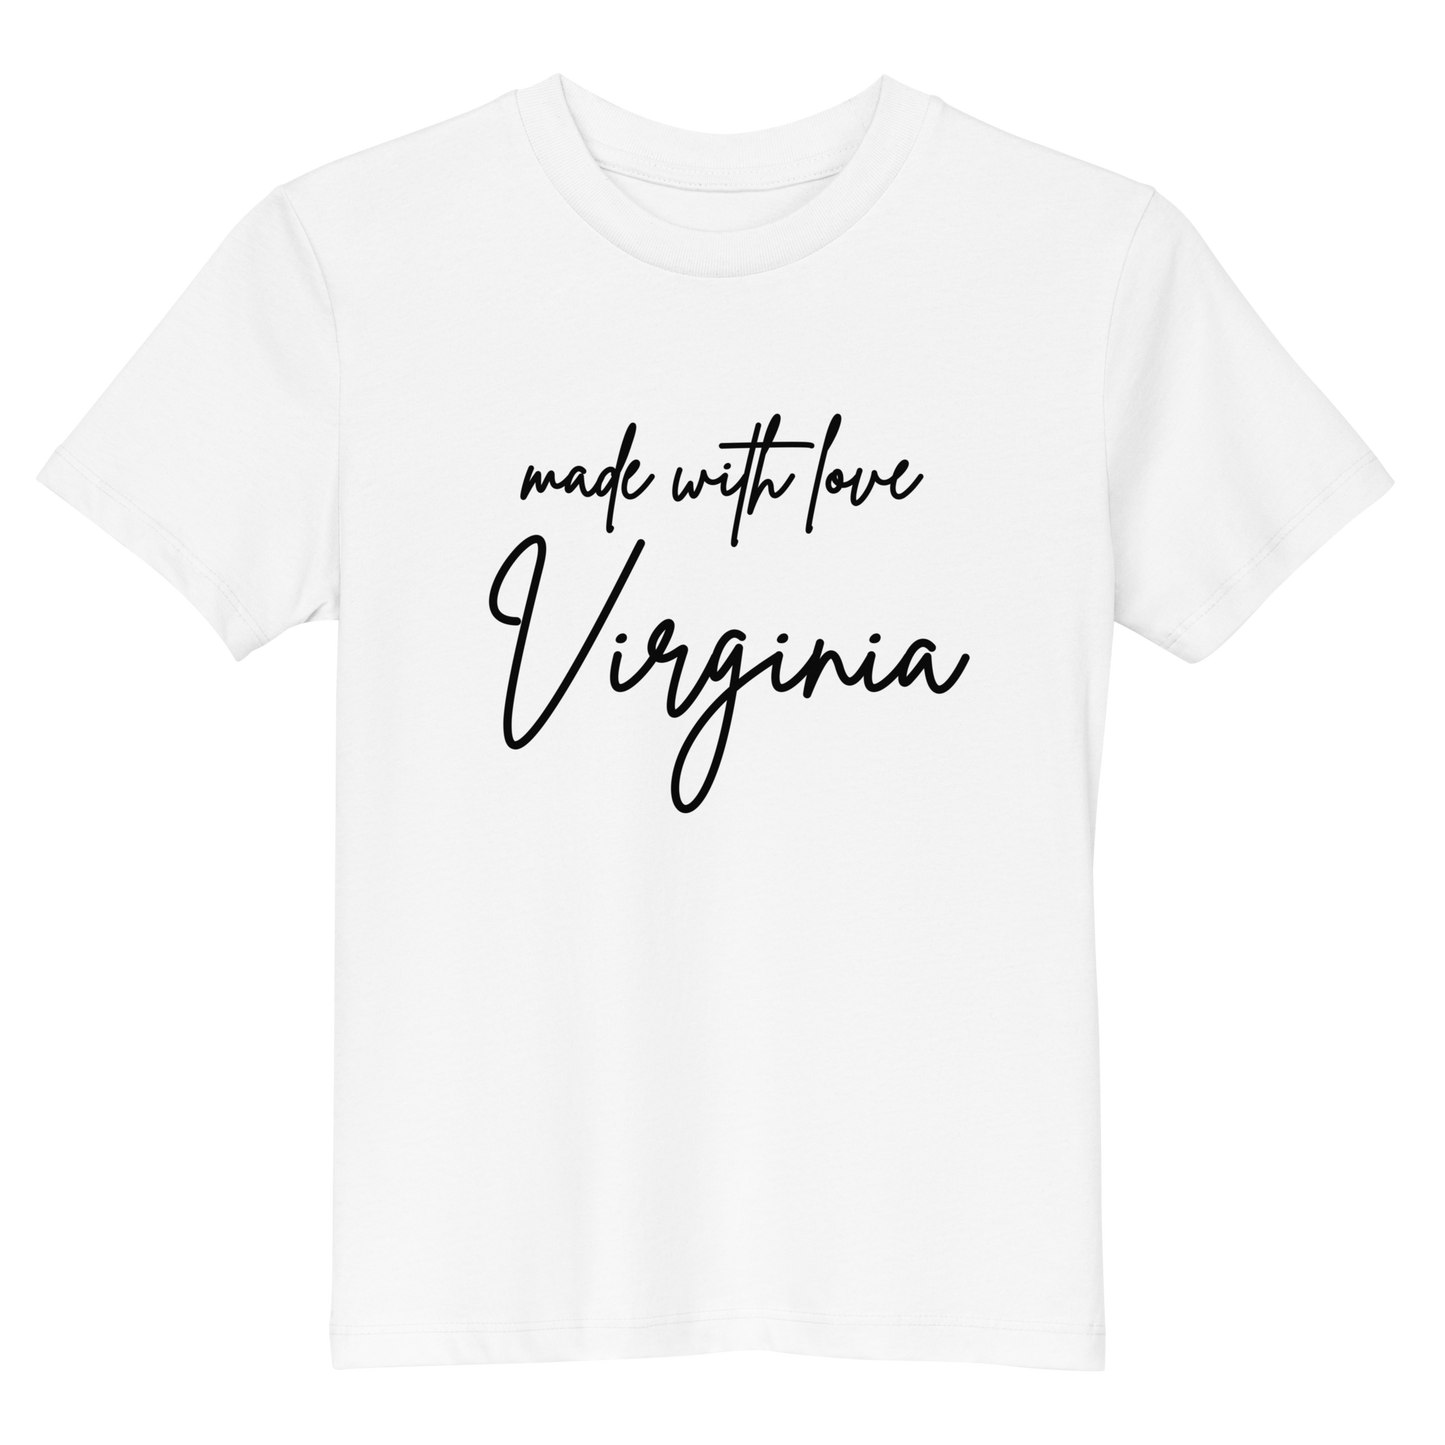 Made with Love Virginia Unisex Organic Cotton Kids T-Shirt White/Black